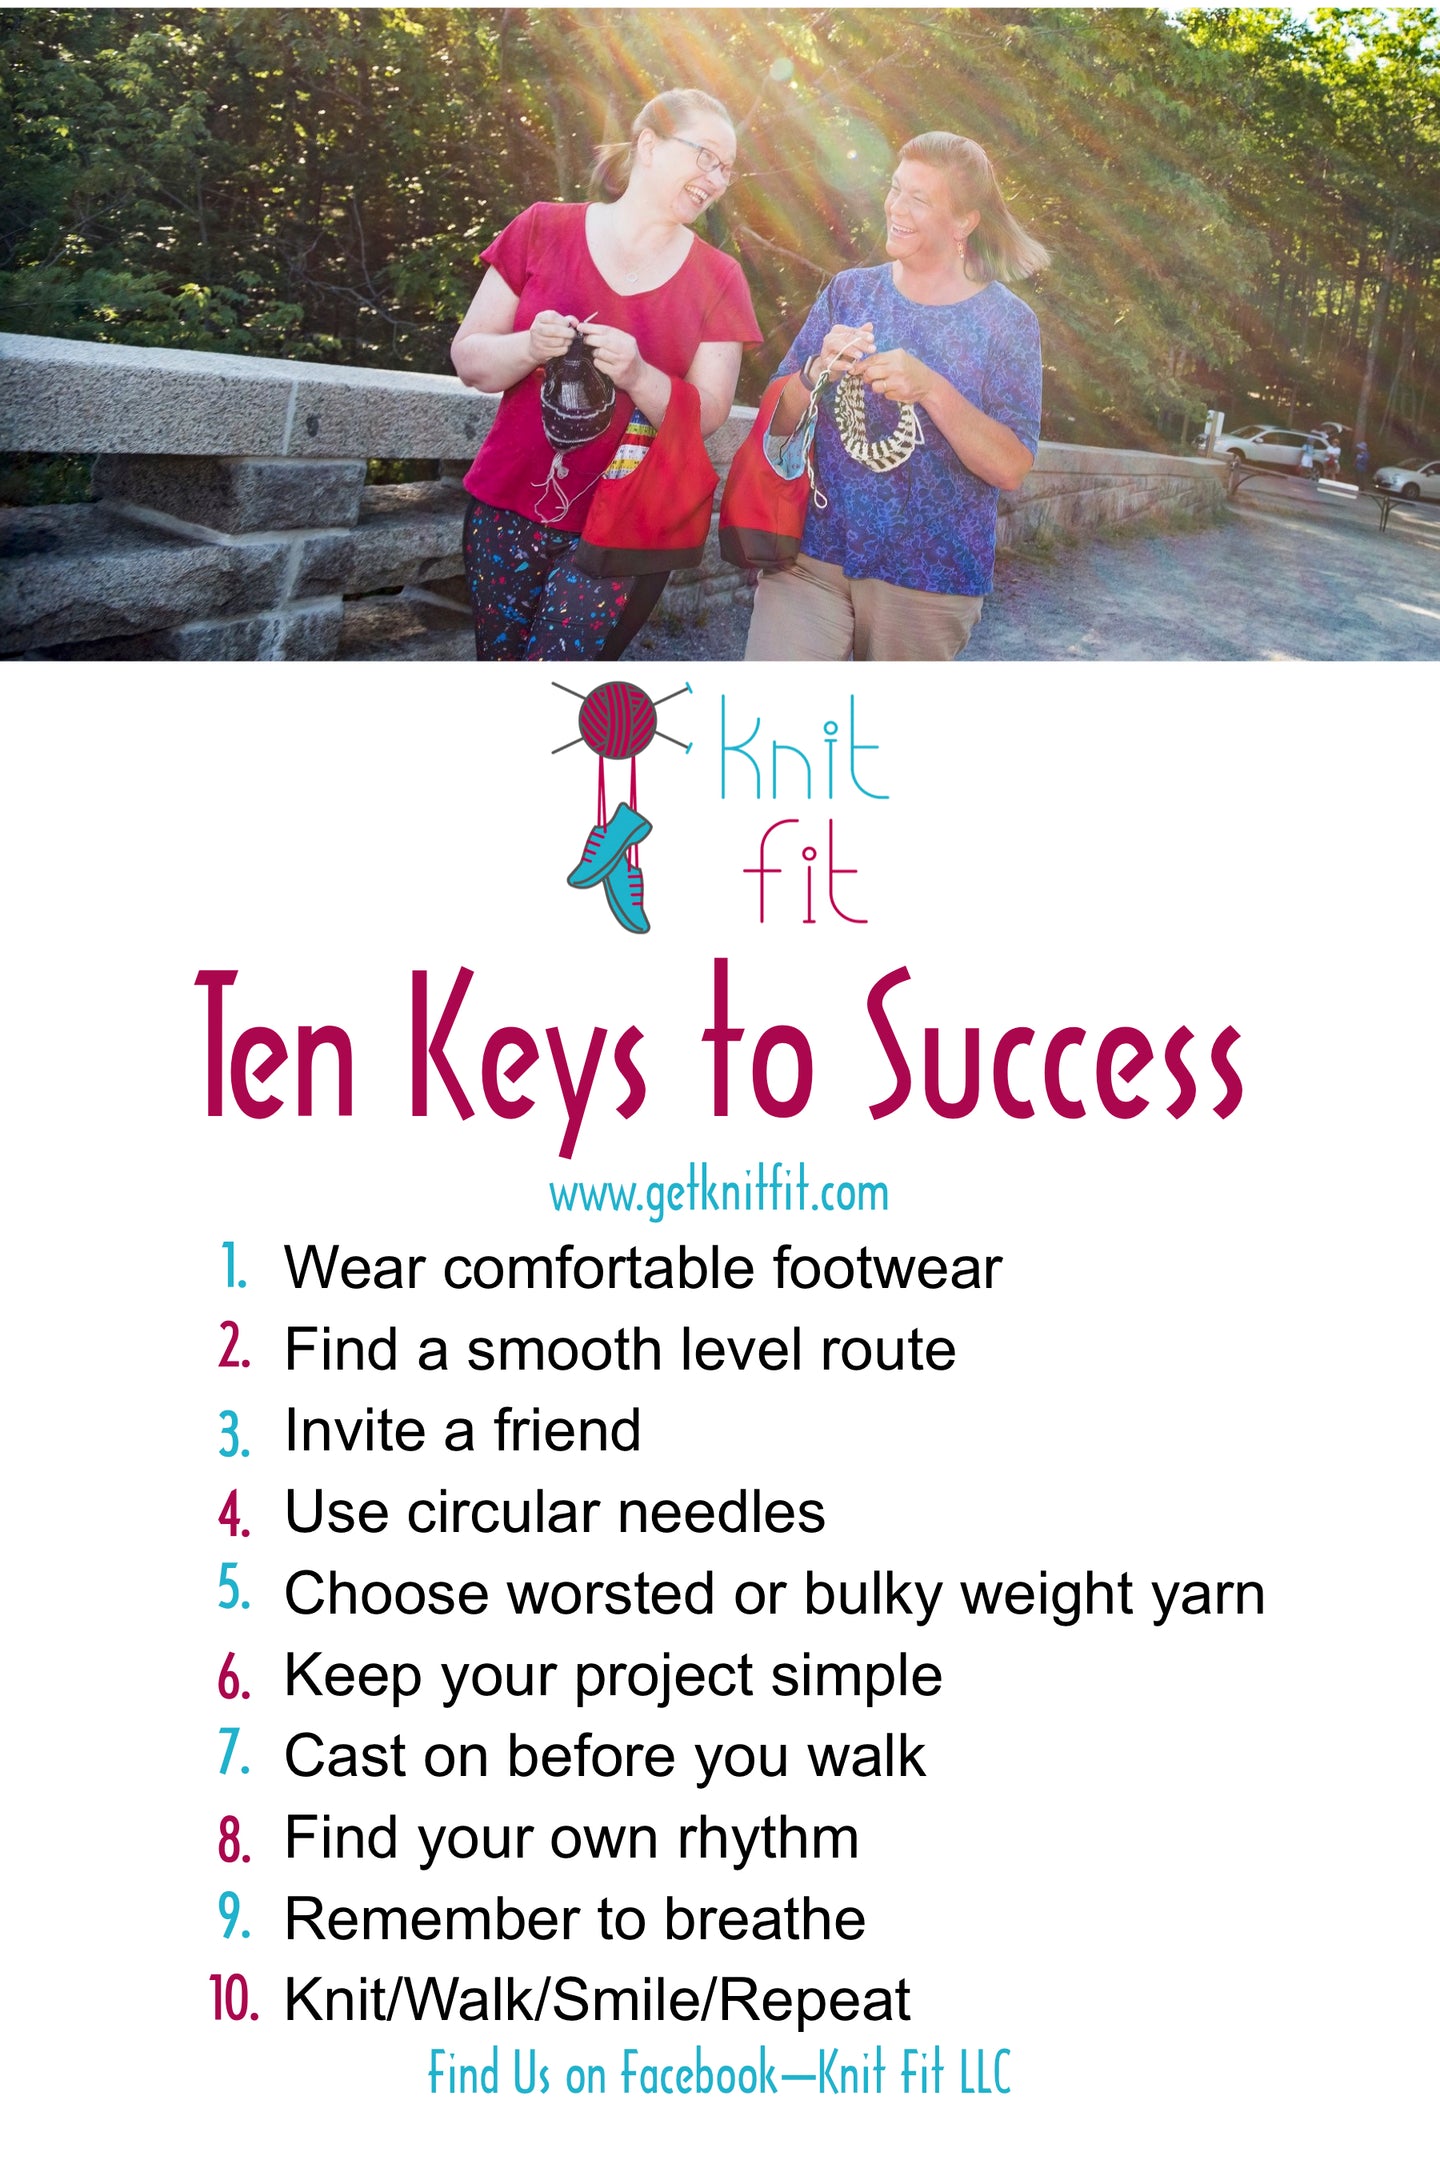 Ten Keys to Success Poster